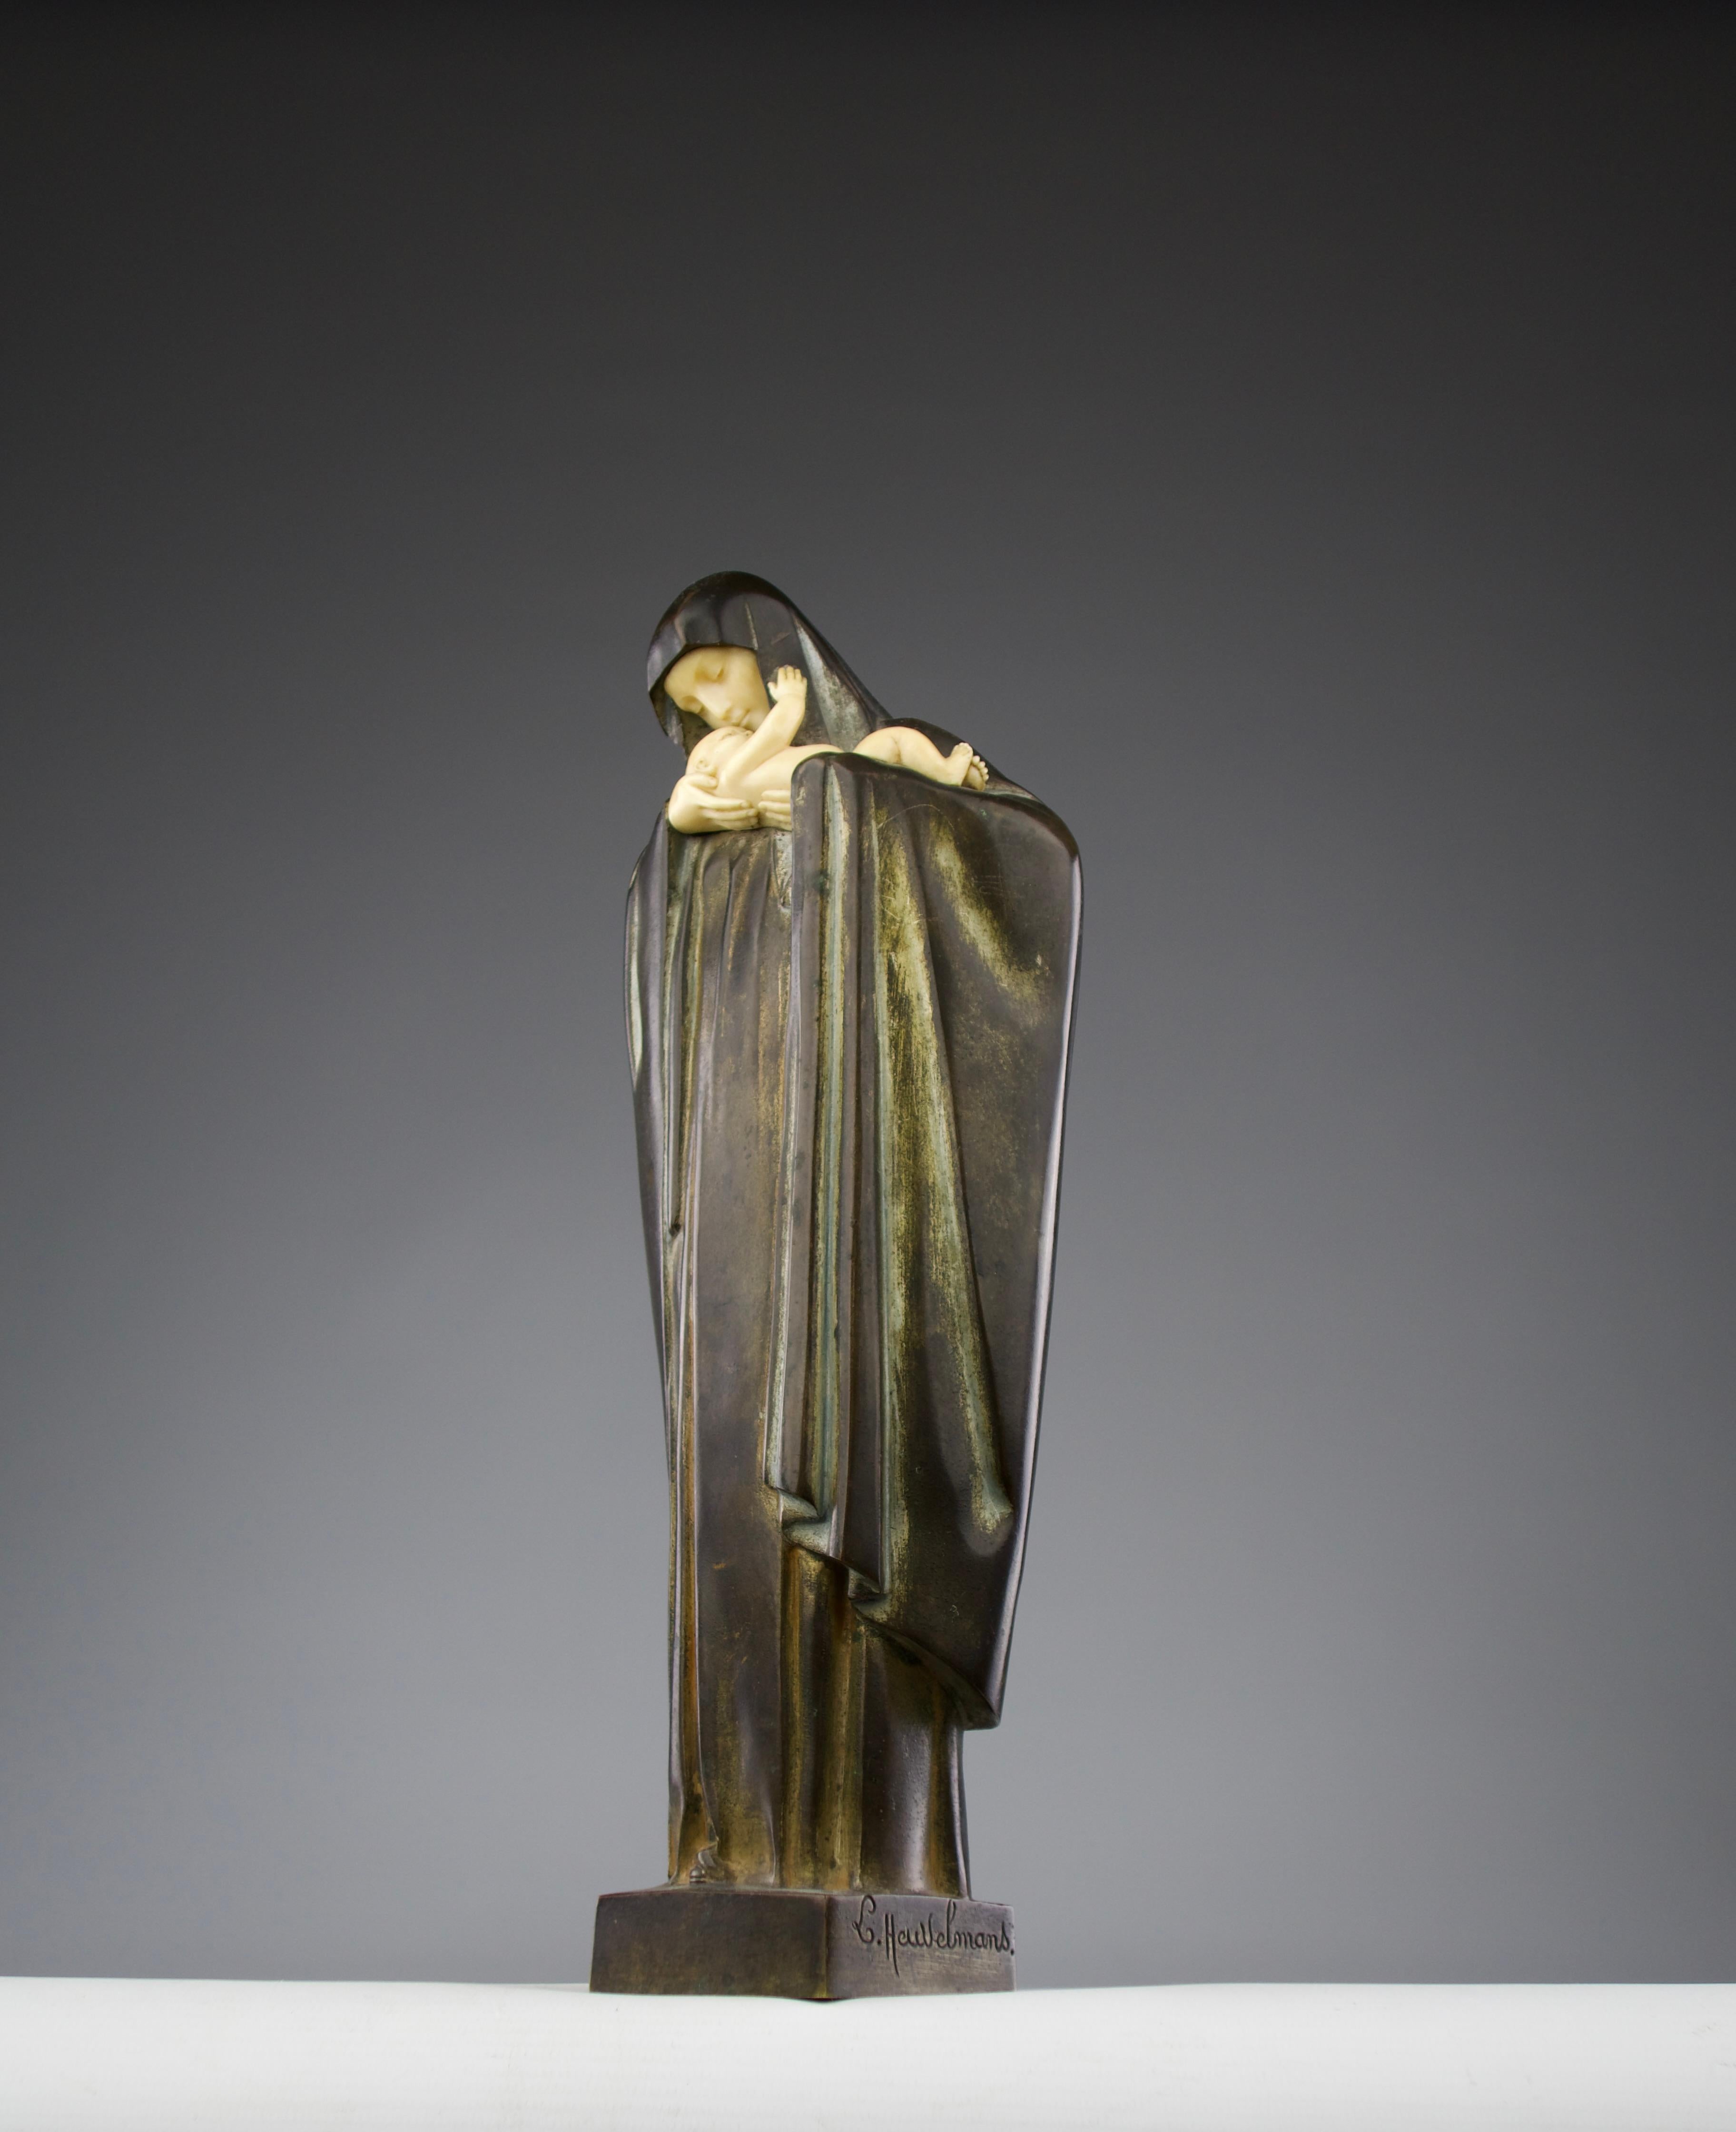 French Lucienne Heuvelmans, Virgin and Child, Art Deco Figurative Sculpture